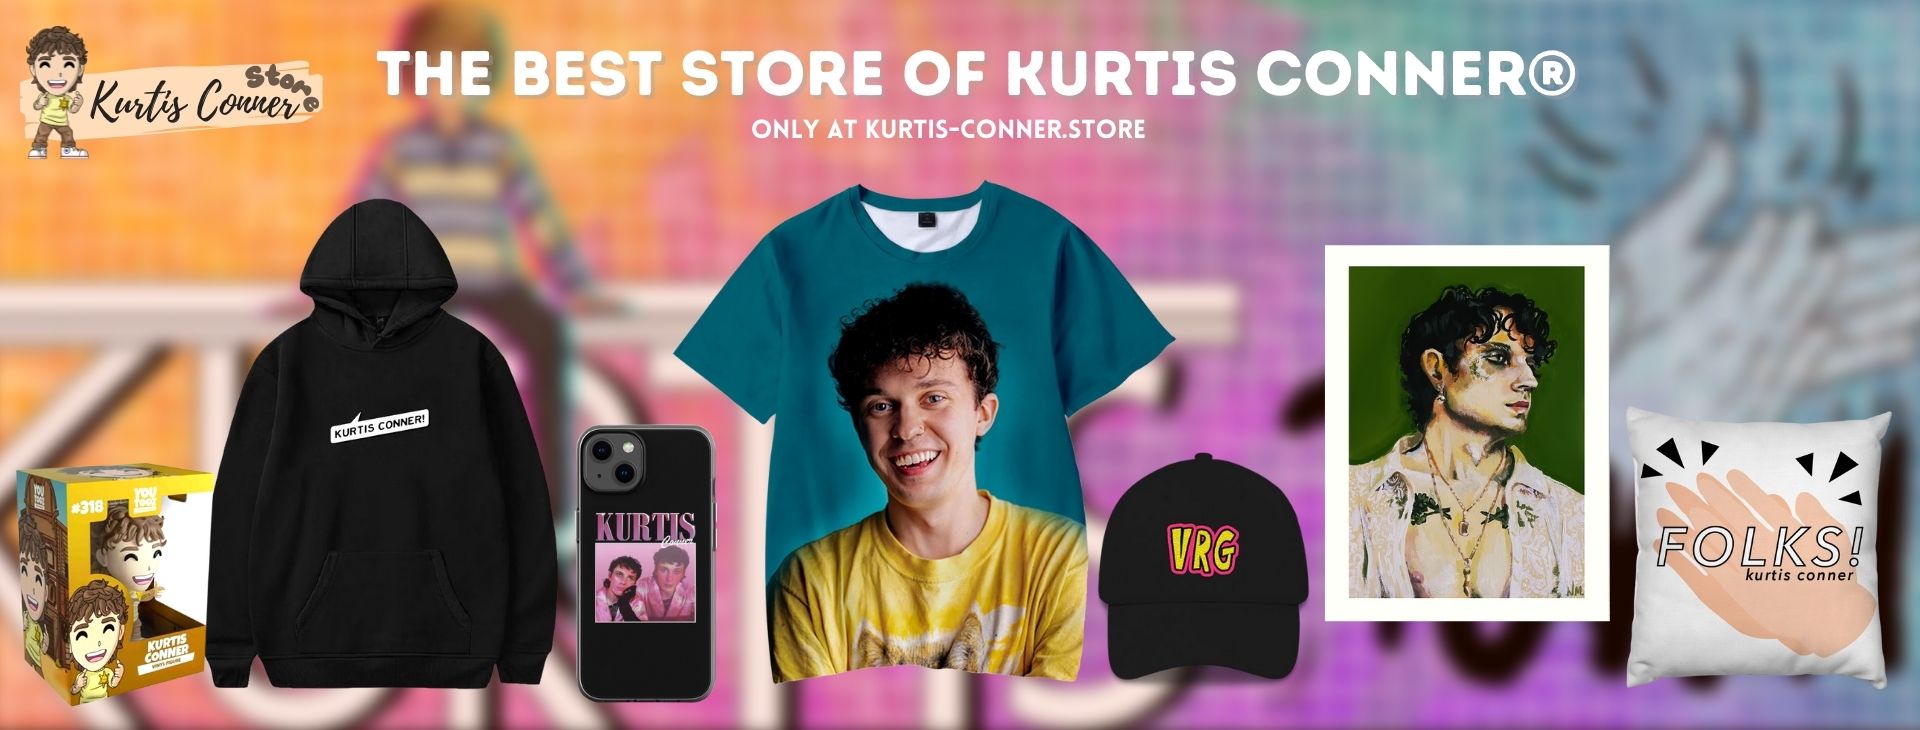 Kurtis Conner Store Web Banner - Kurtis Conner Store